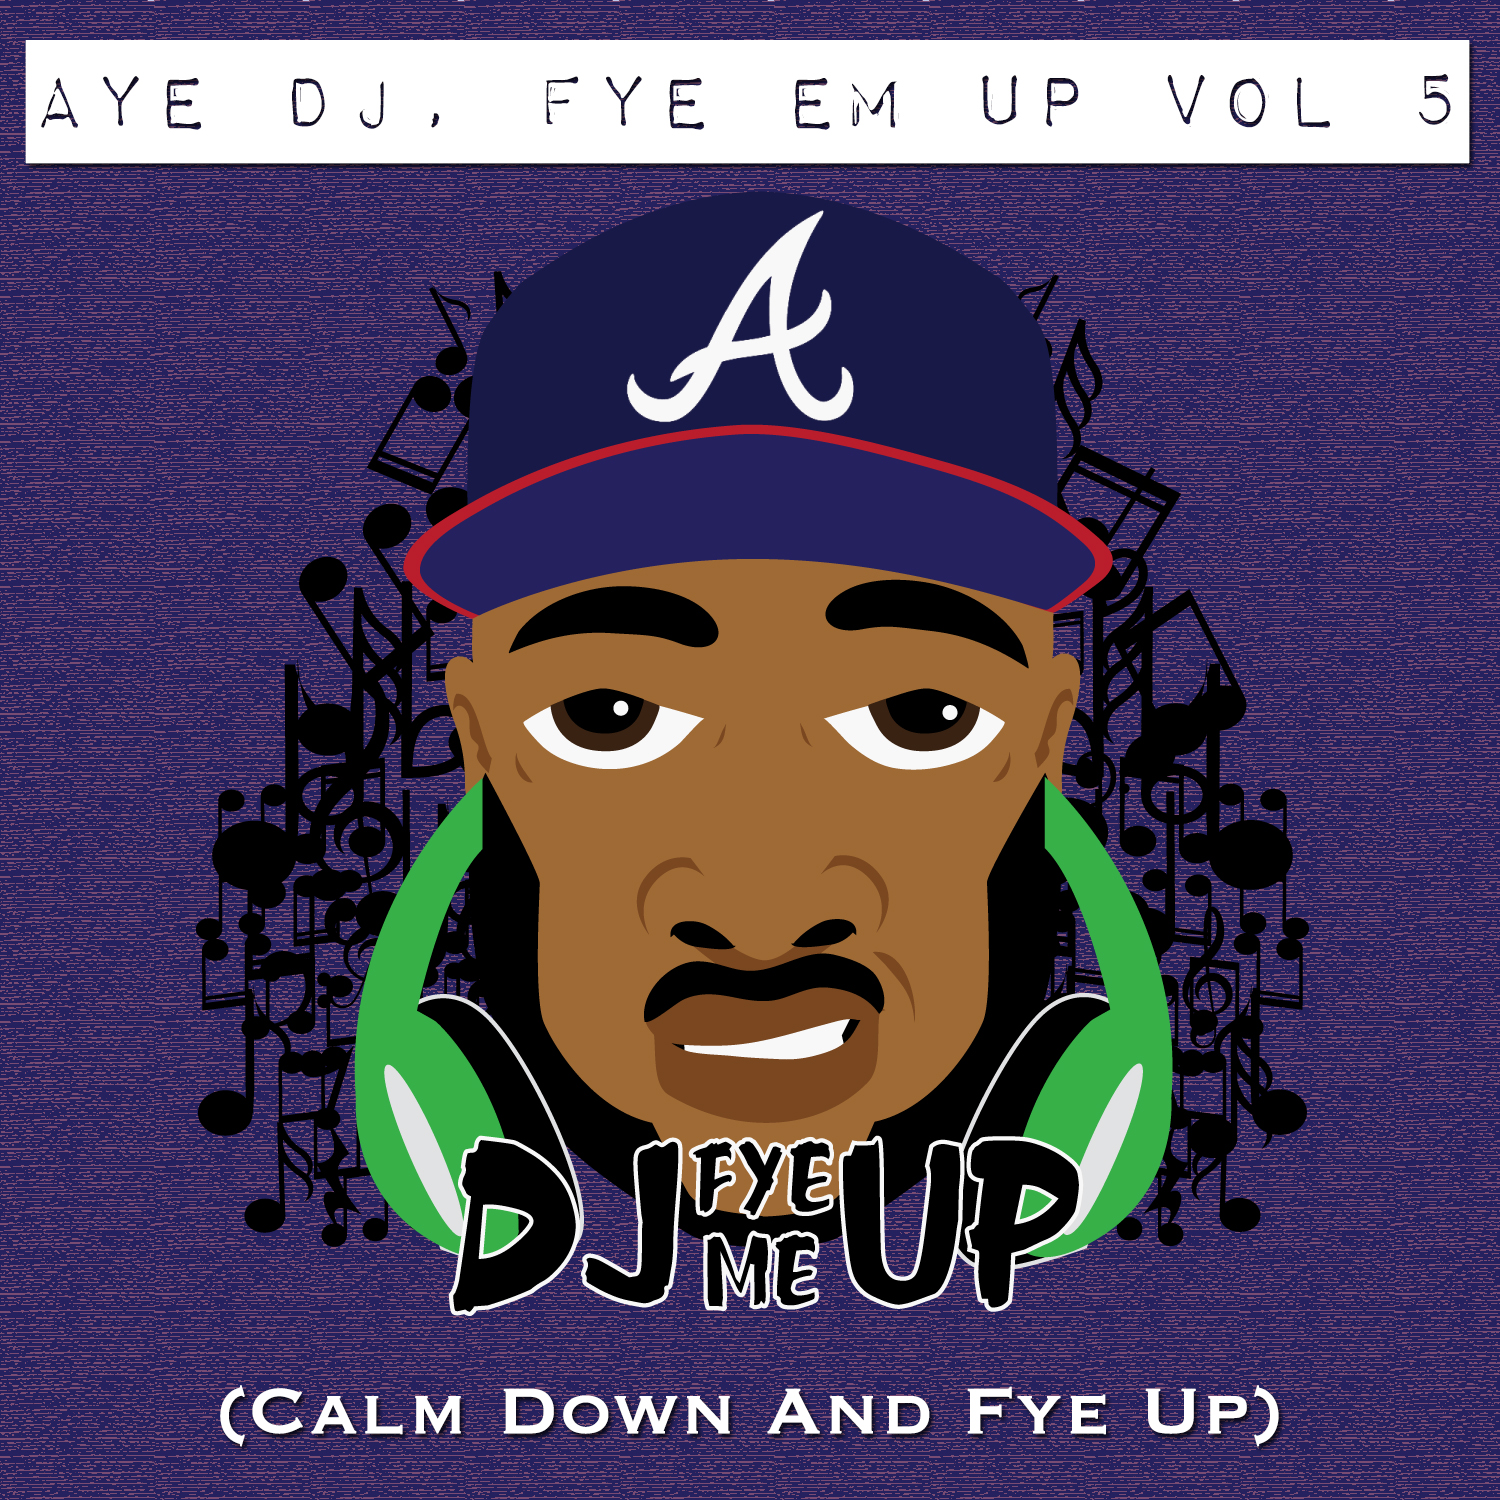 DJ FyeMeUp – ‘Aye Dj, Fye Em’ Up Vol 5′